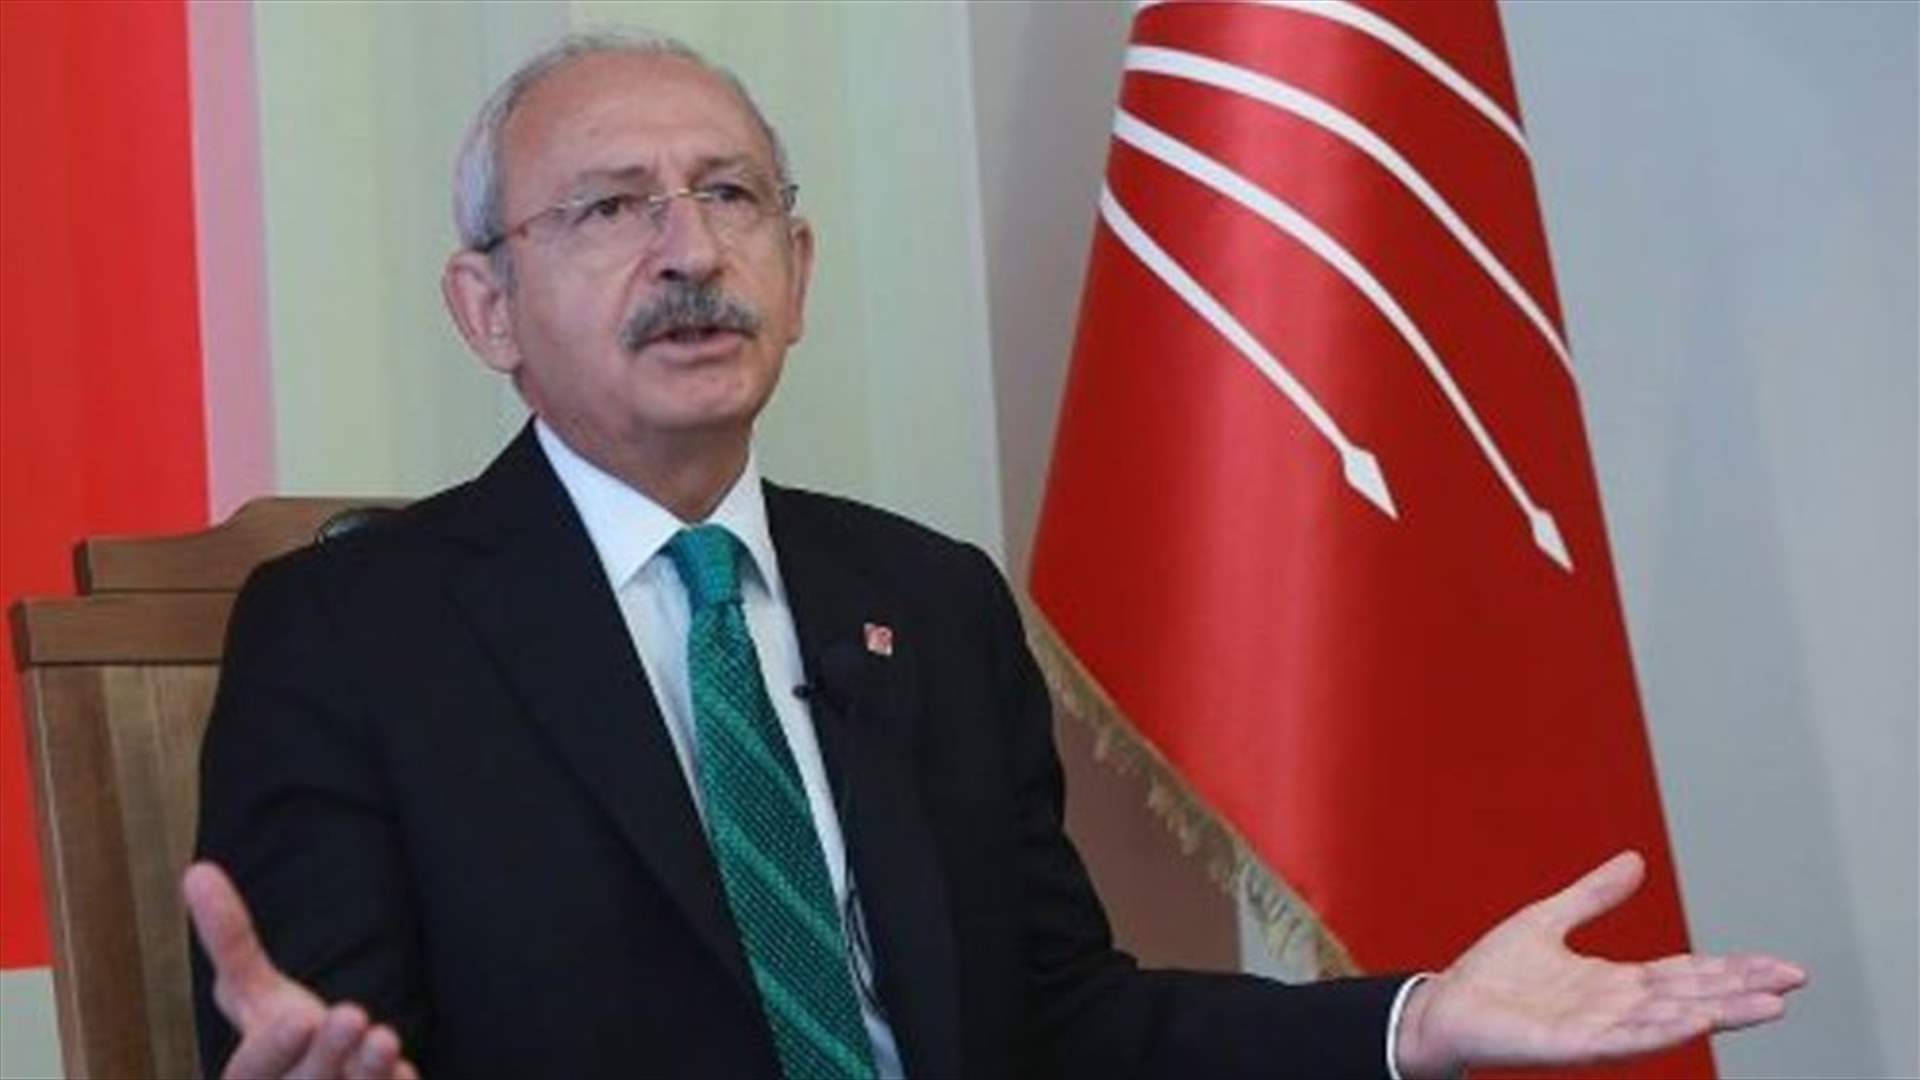 Turkish opposition leader targeted by Kurdish militants - minister